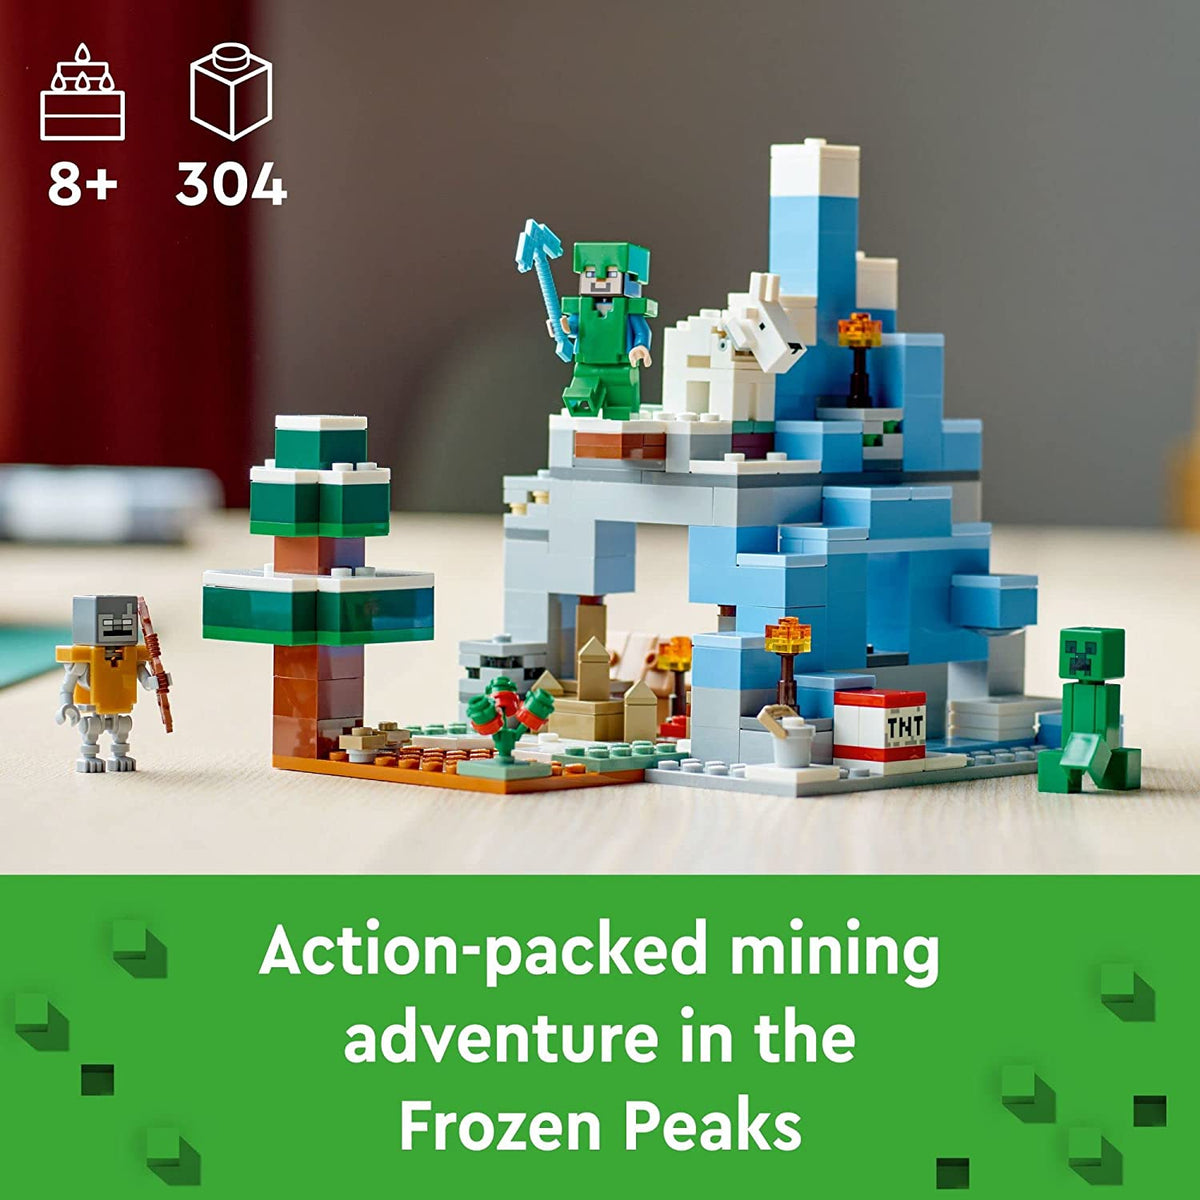 MINECRAFT 21243: The Frozen Peaks